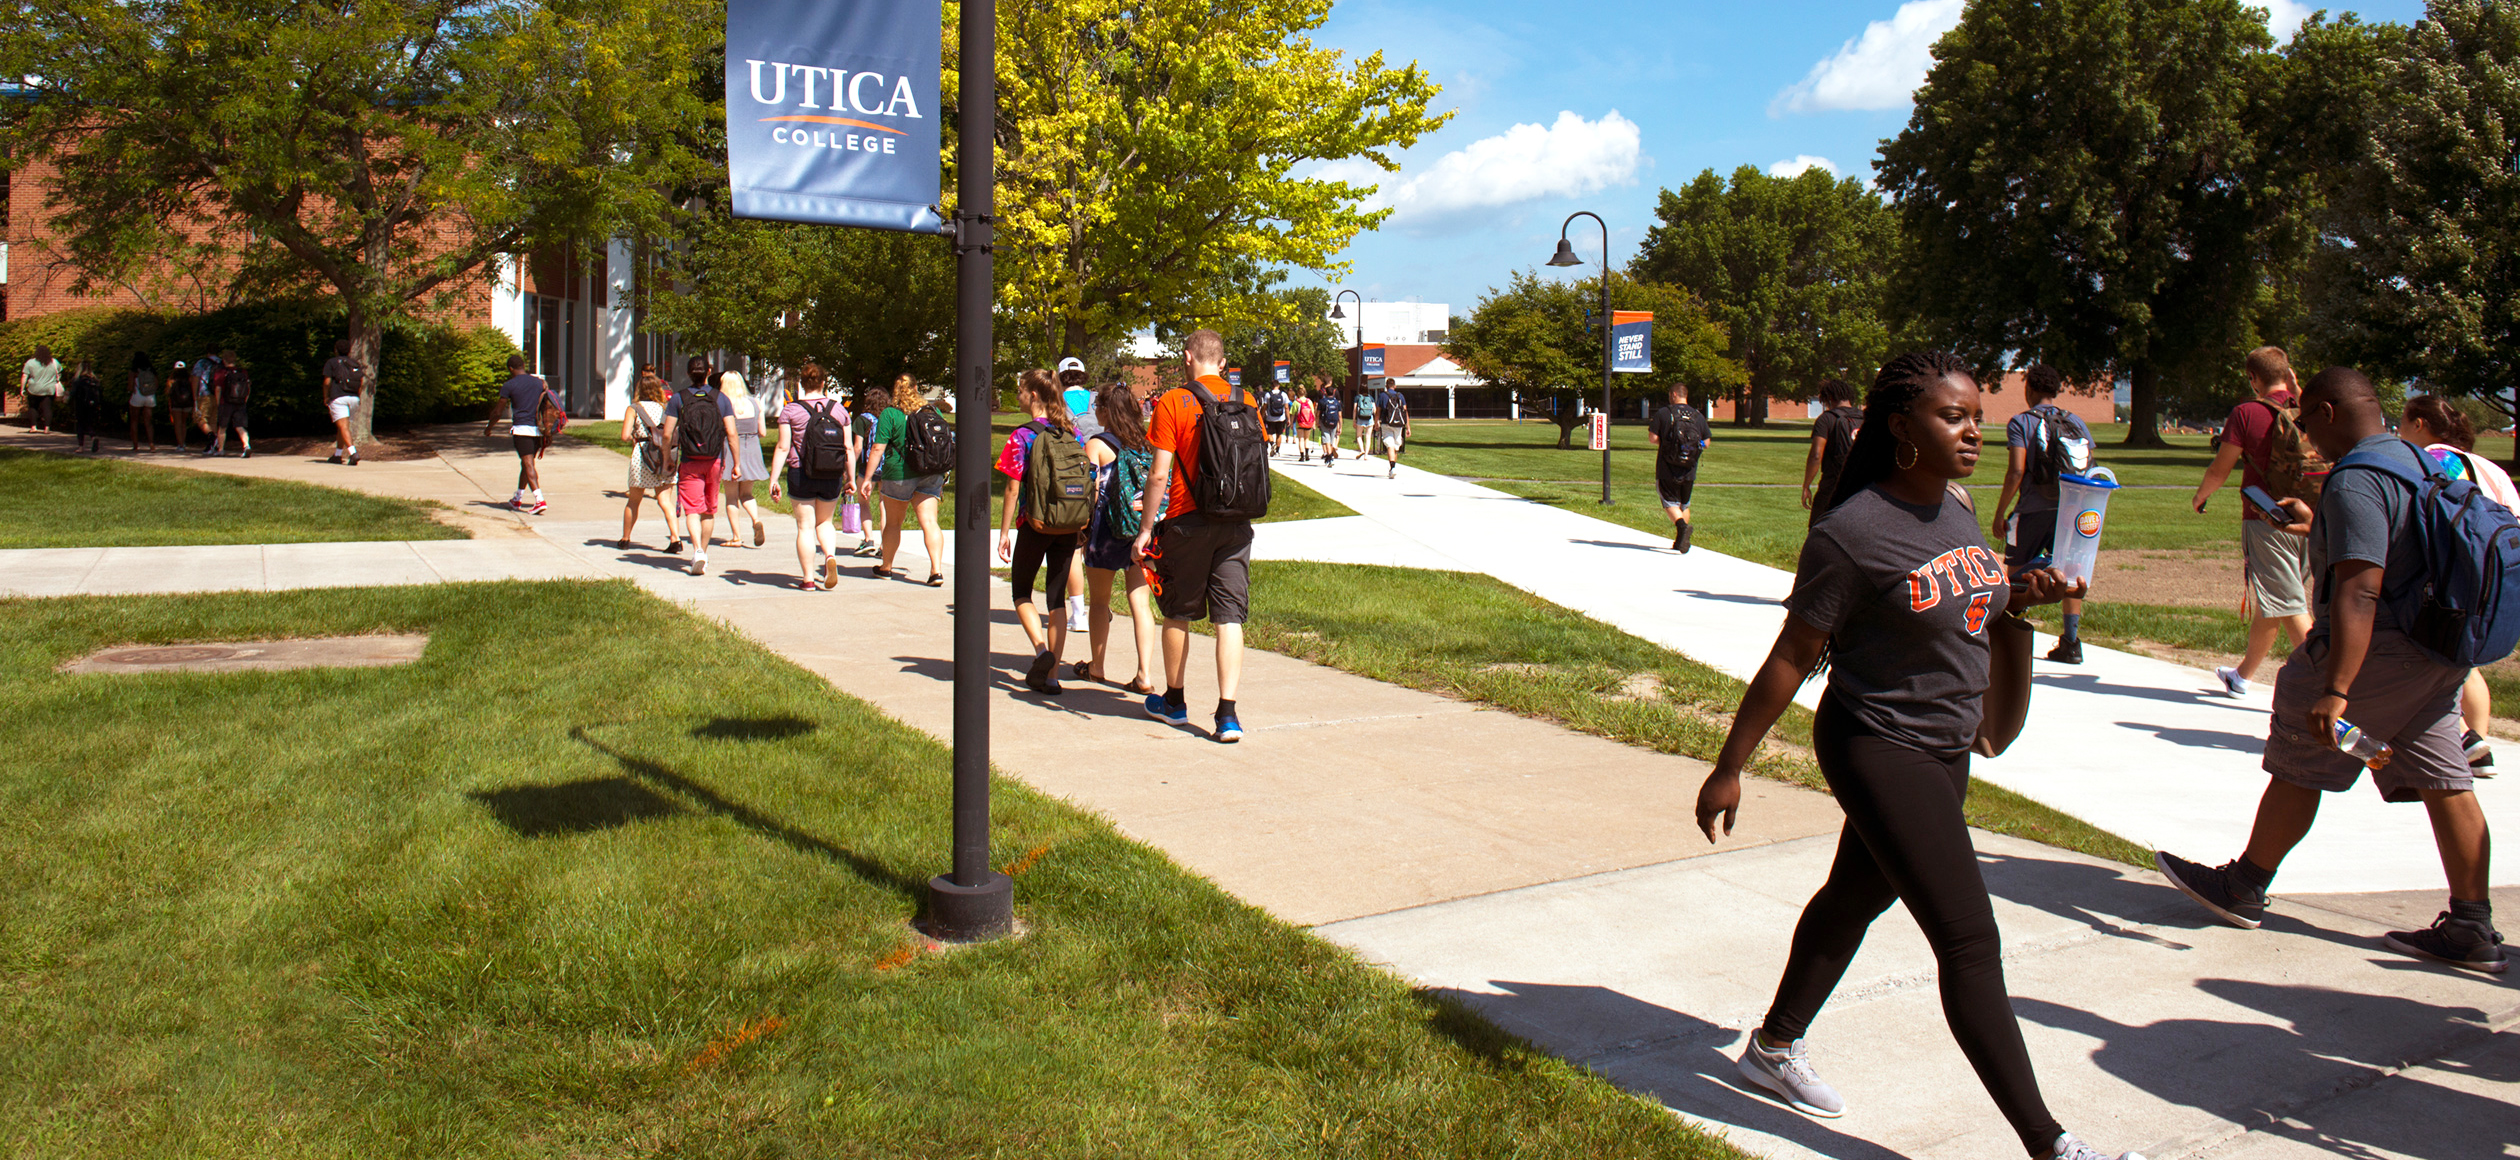 The Applied Ethics Institute at Utica University